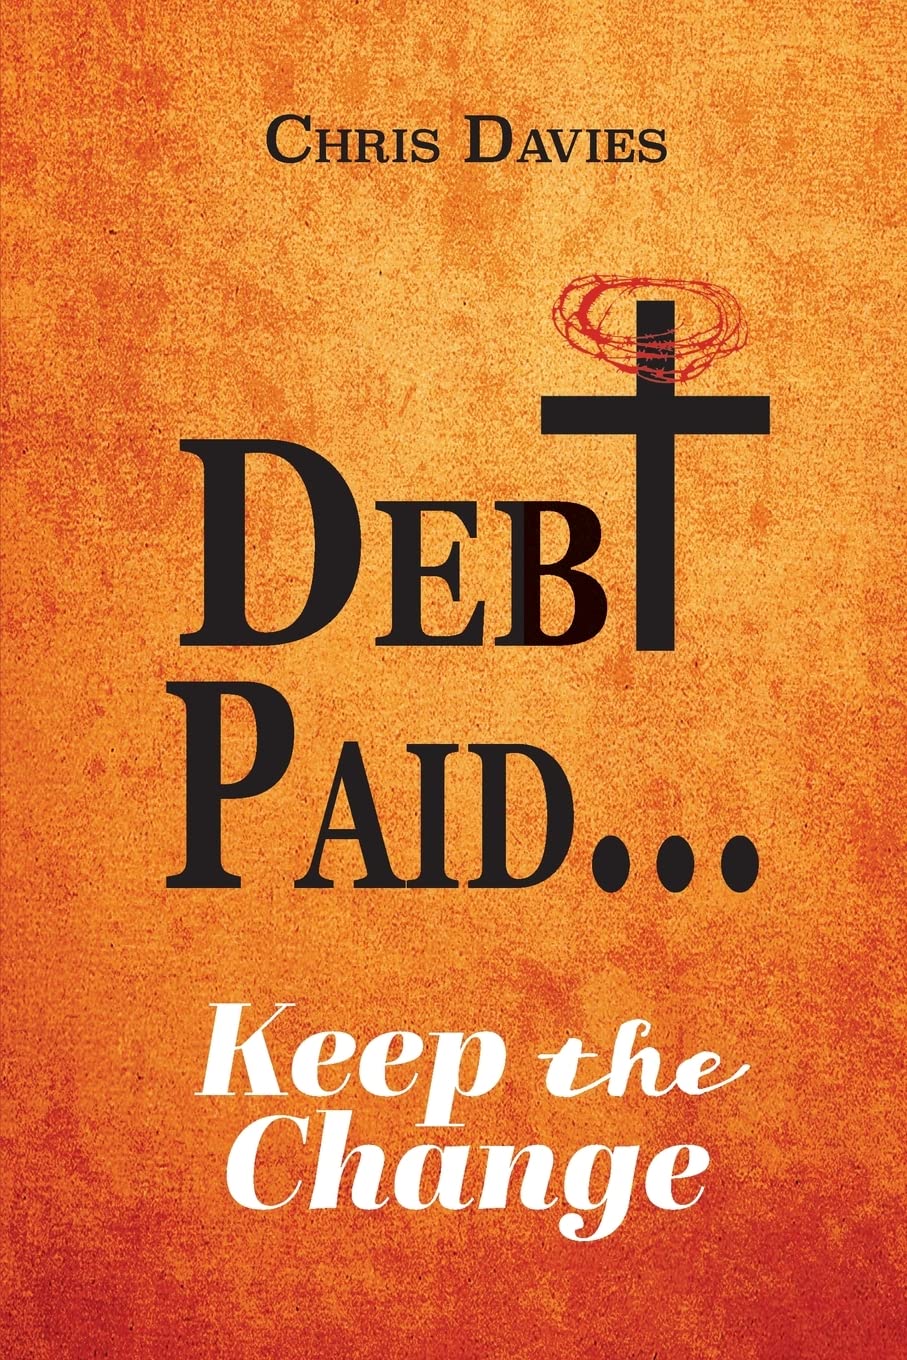 Debt Paid...: Keep the Change SureShot Books